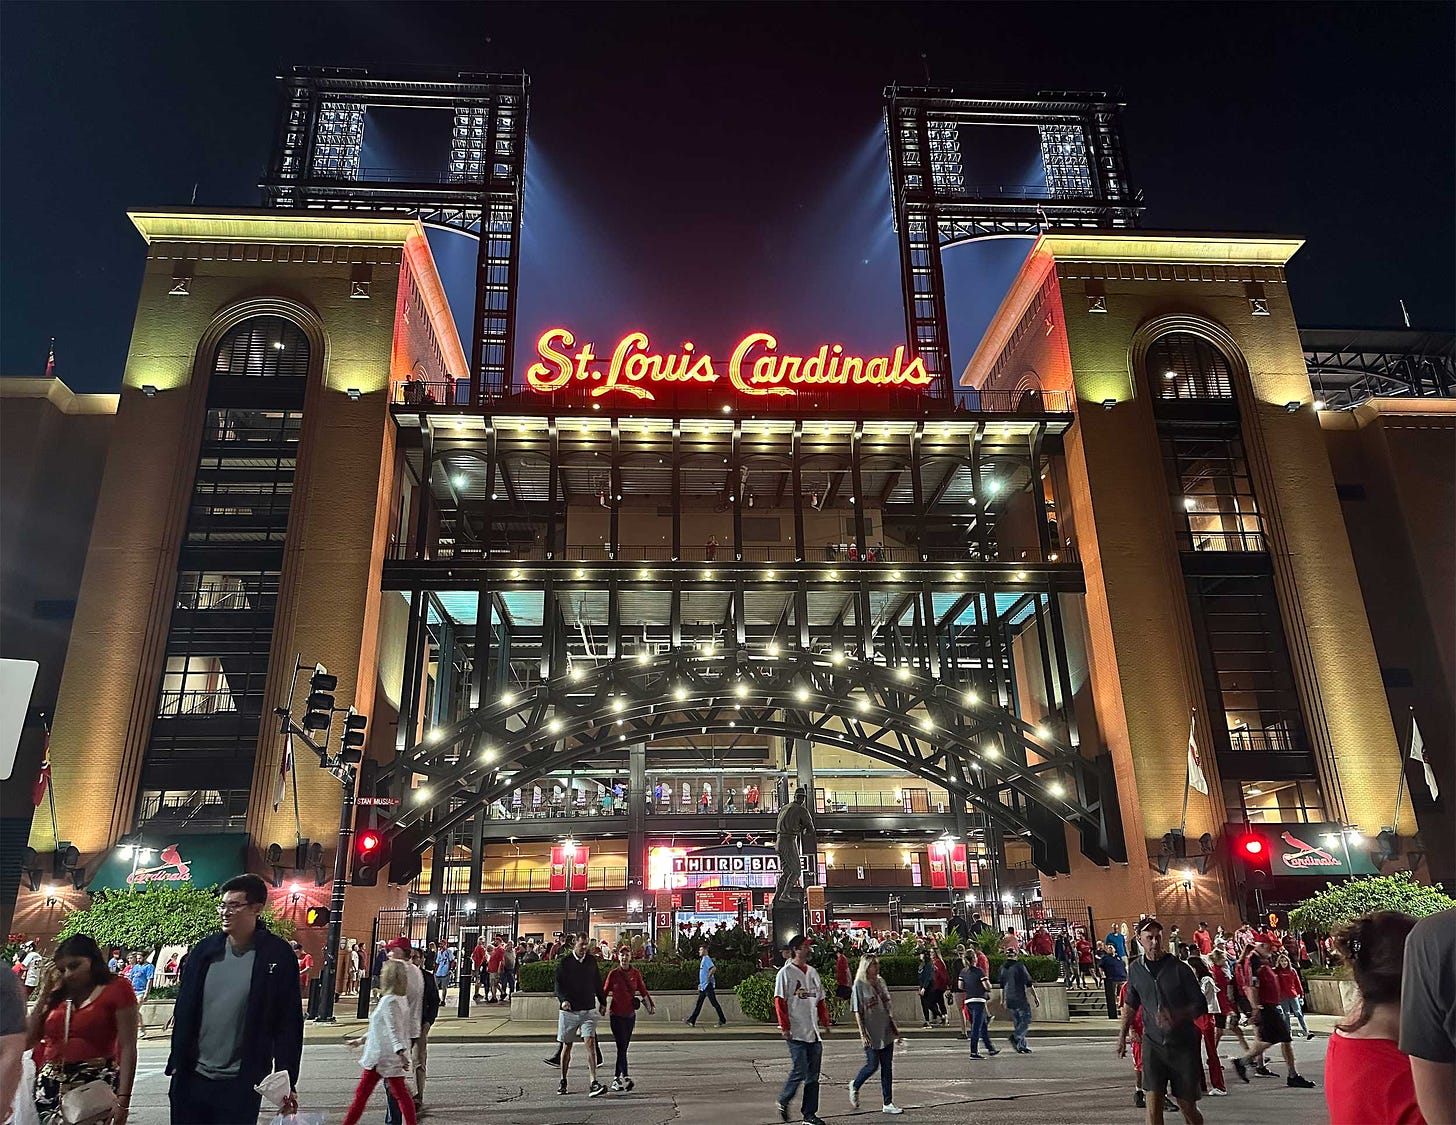 Exterior of baseball stadium at night with lit up sign that reads Saint Louis Cardinals.